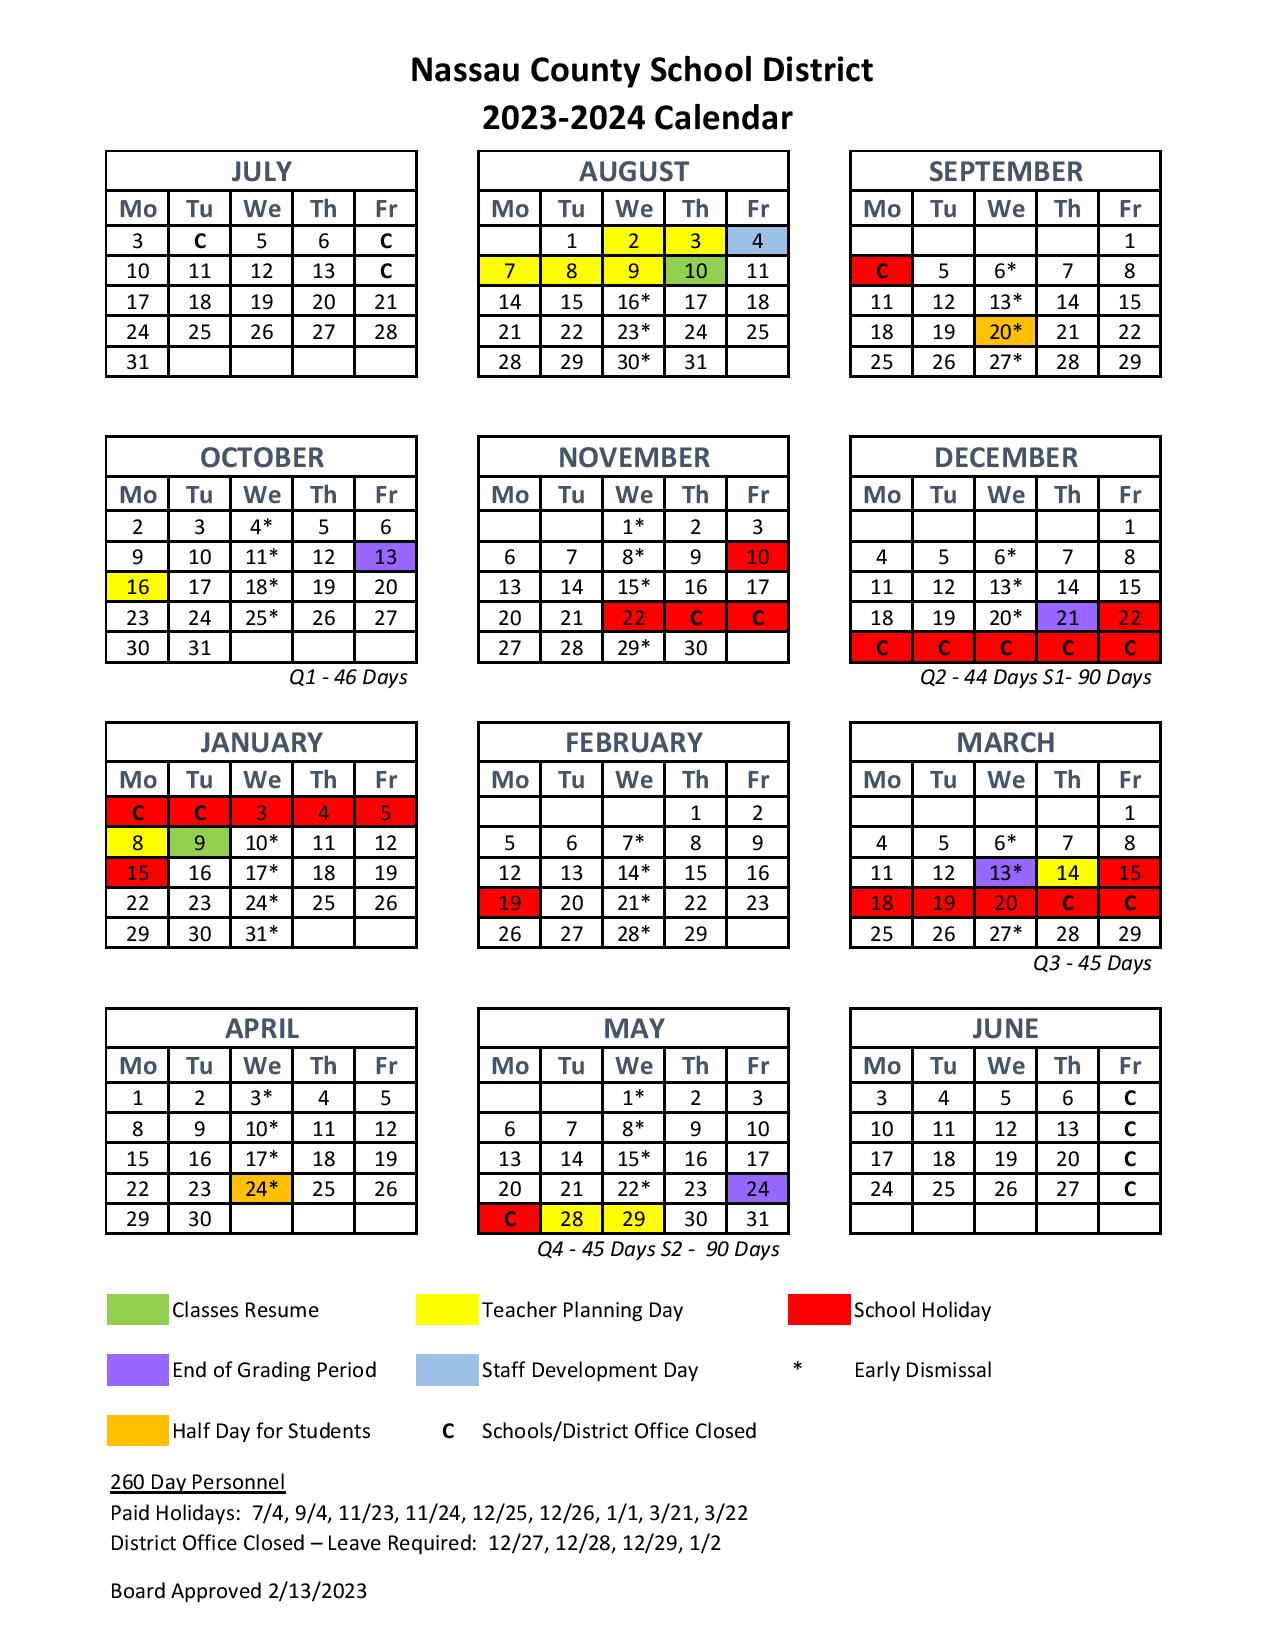 Nassau County Schools Calendar 2024 (Holiday Dates)